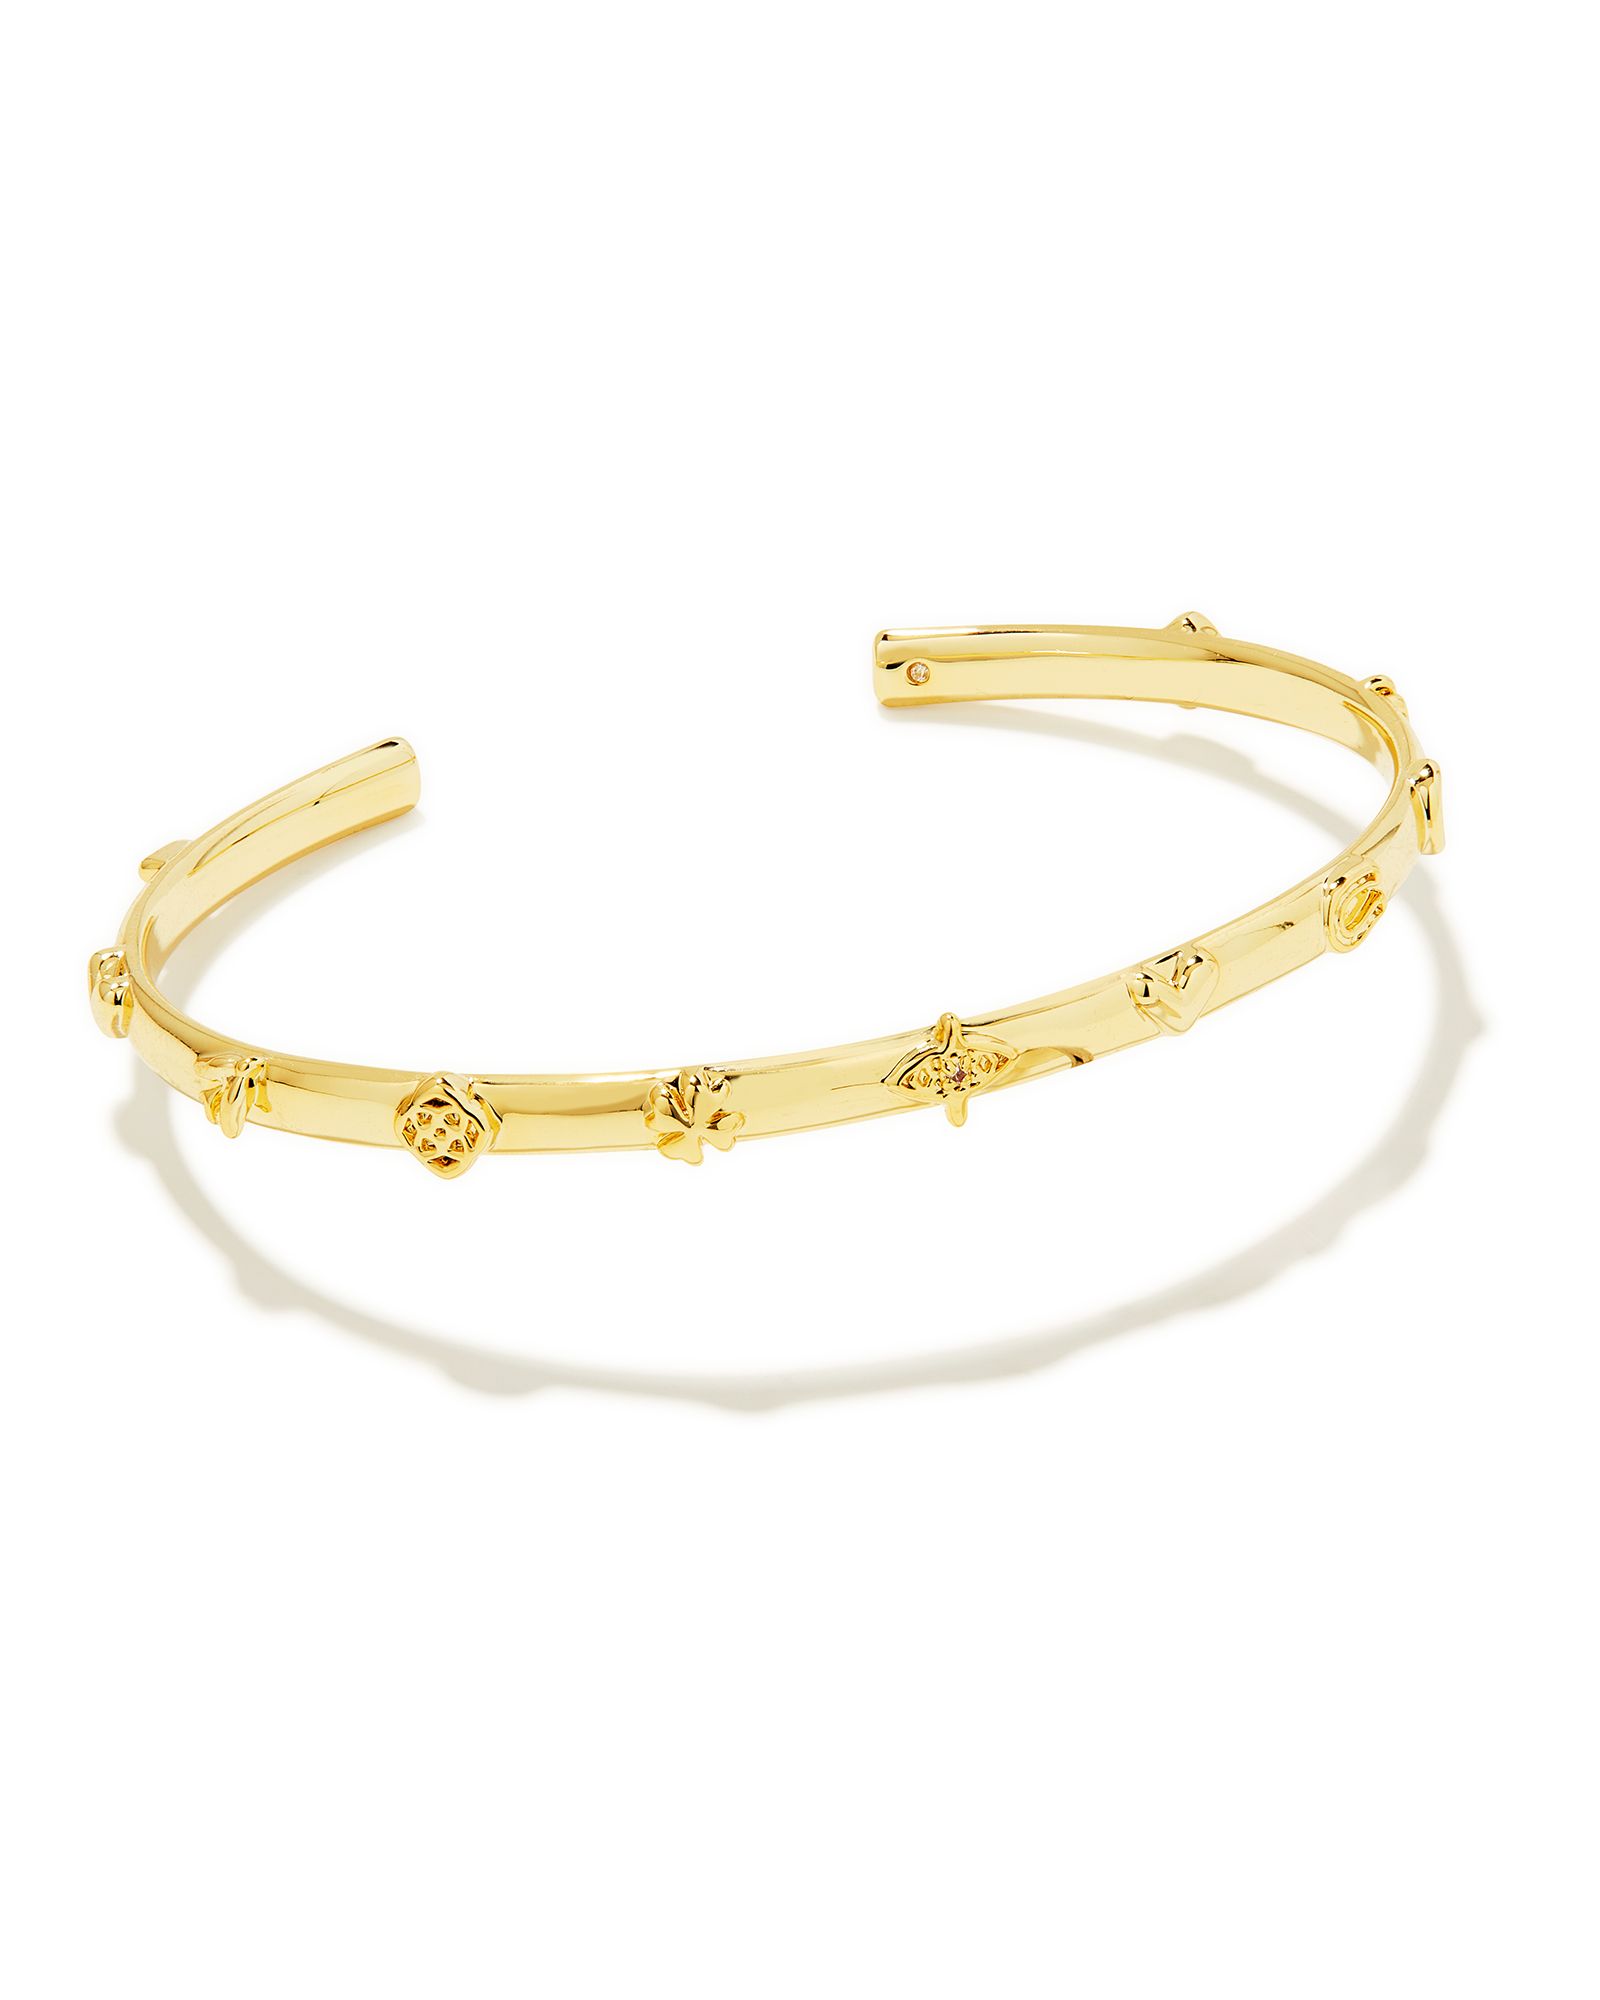 Beatrix Cuff Bracelet in Gold | Kendra Scott | Kendra Scott